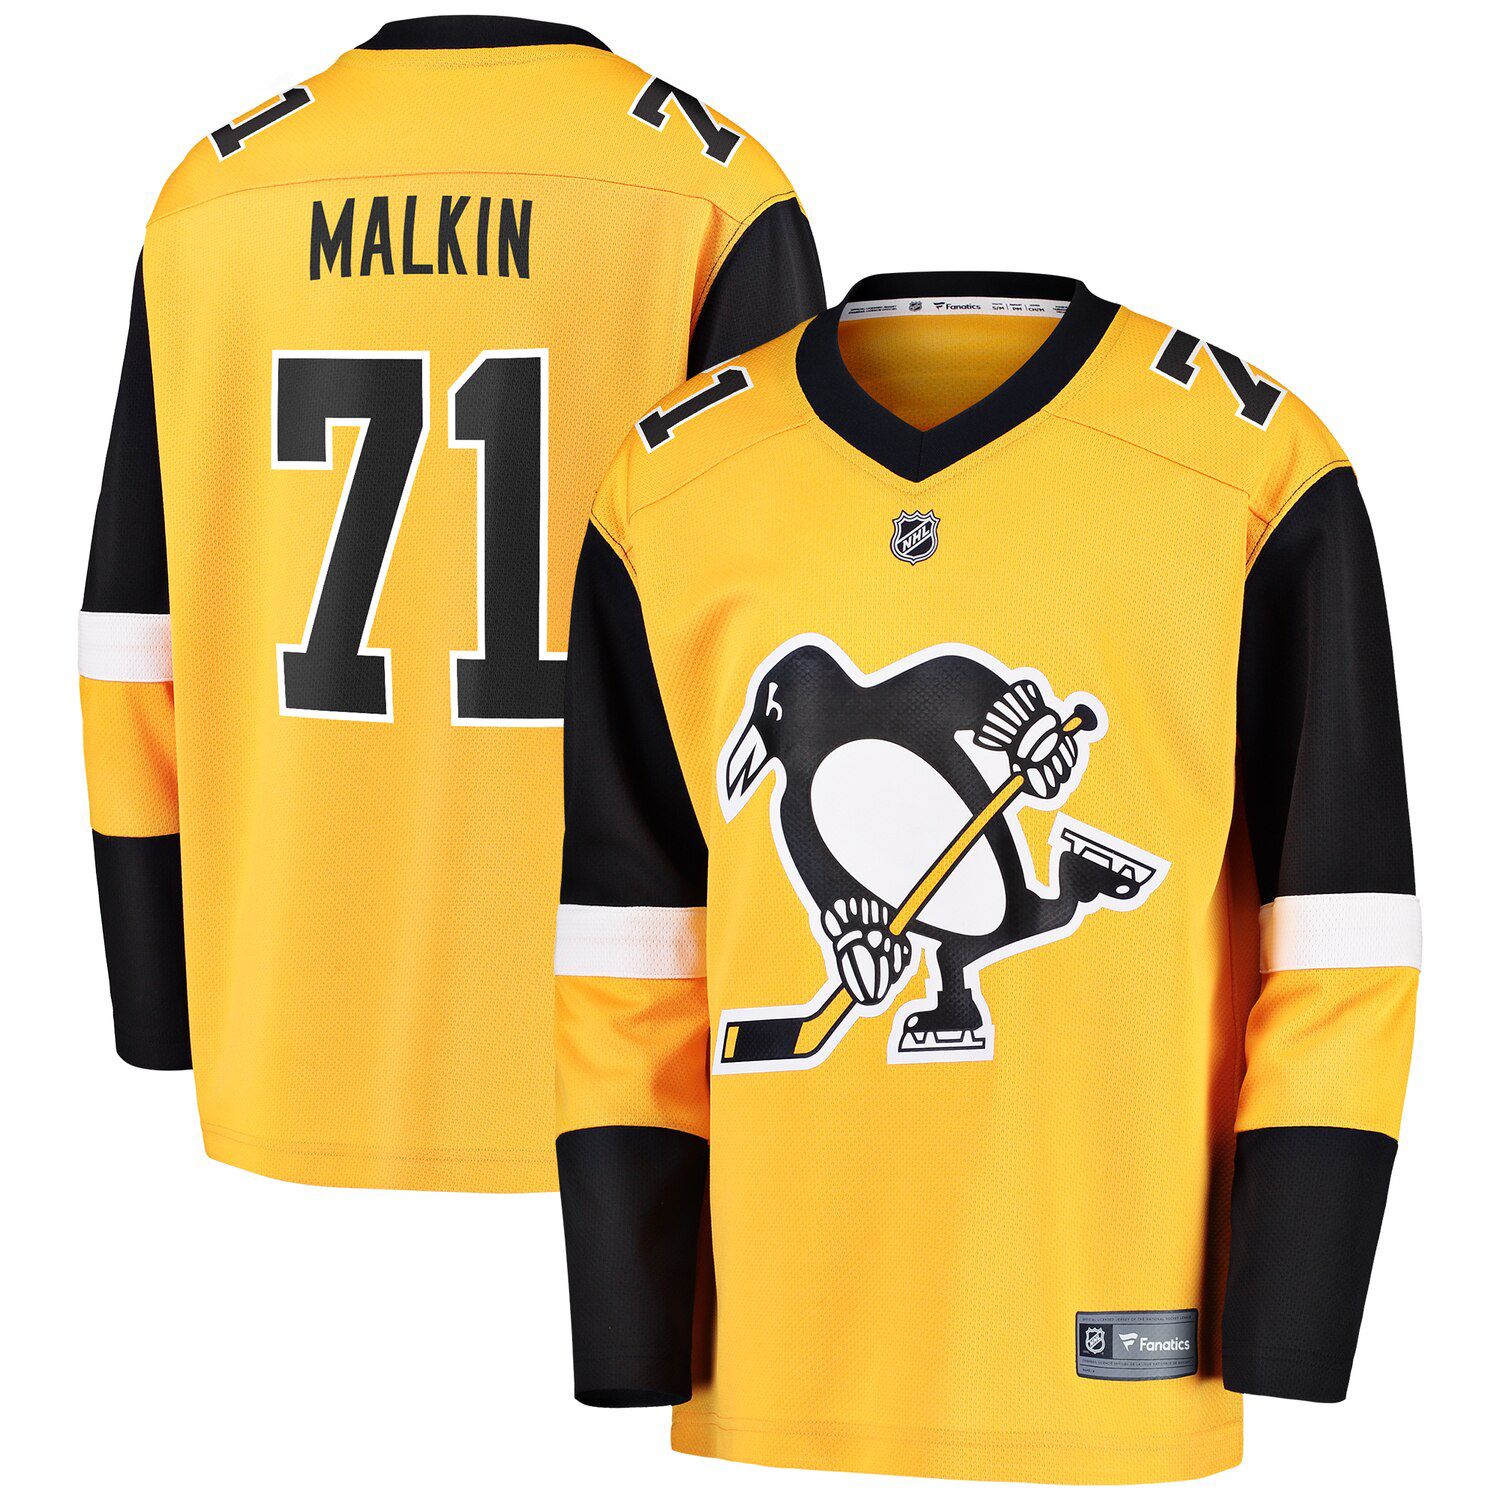 penguins alternate jersey